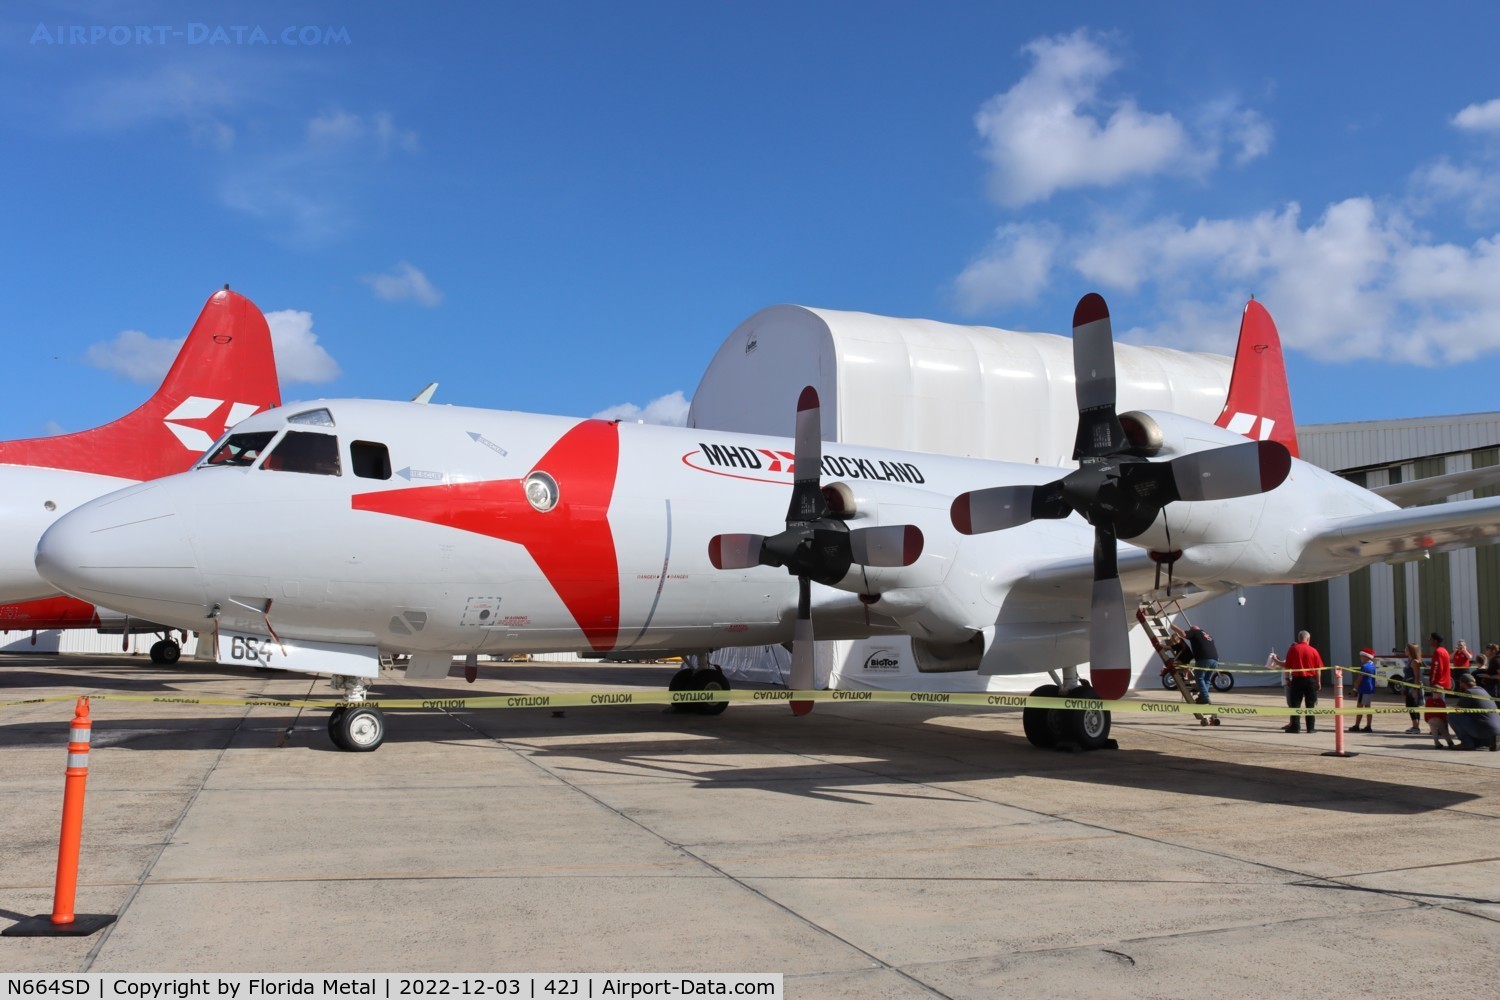 N664SD, Lockheed AP-3C Orion C/N 285D-5793, AP-3C Rockland zx